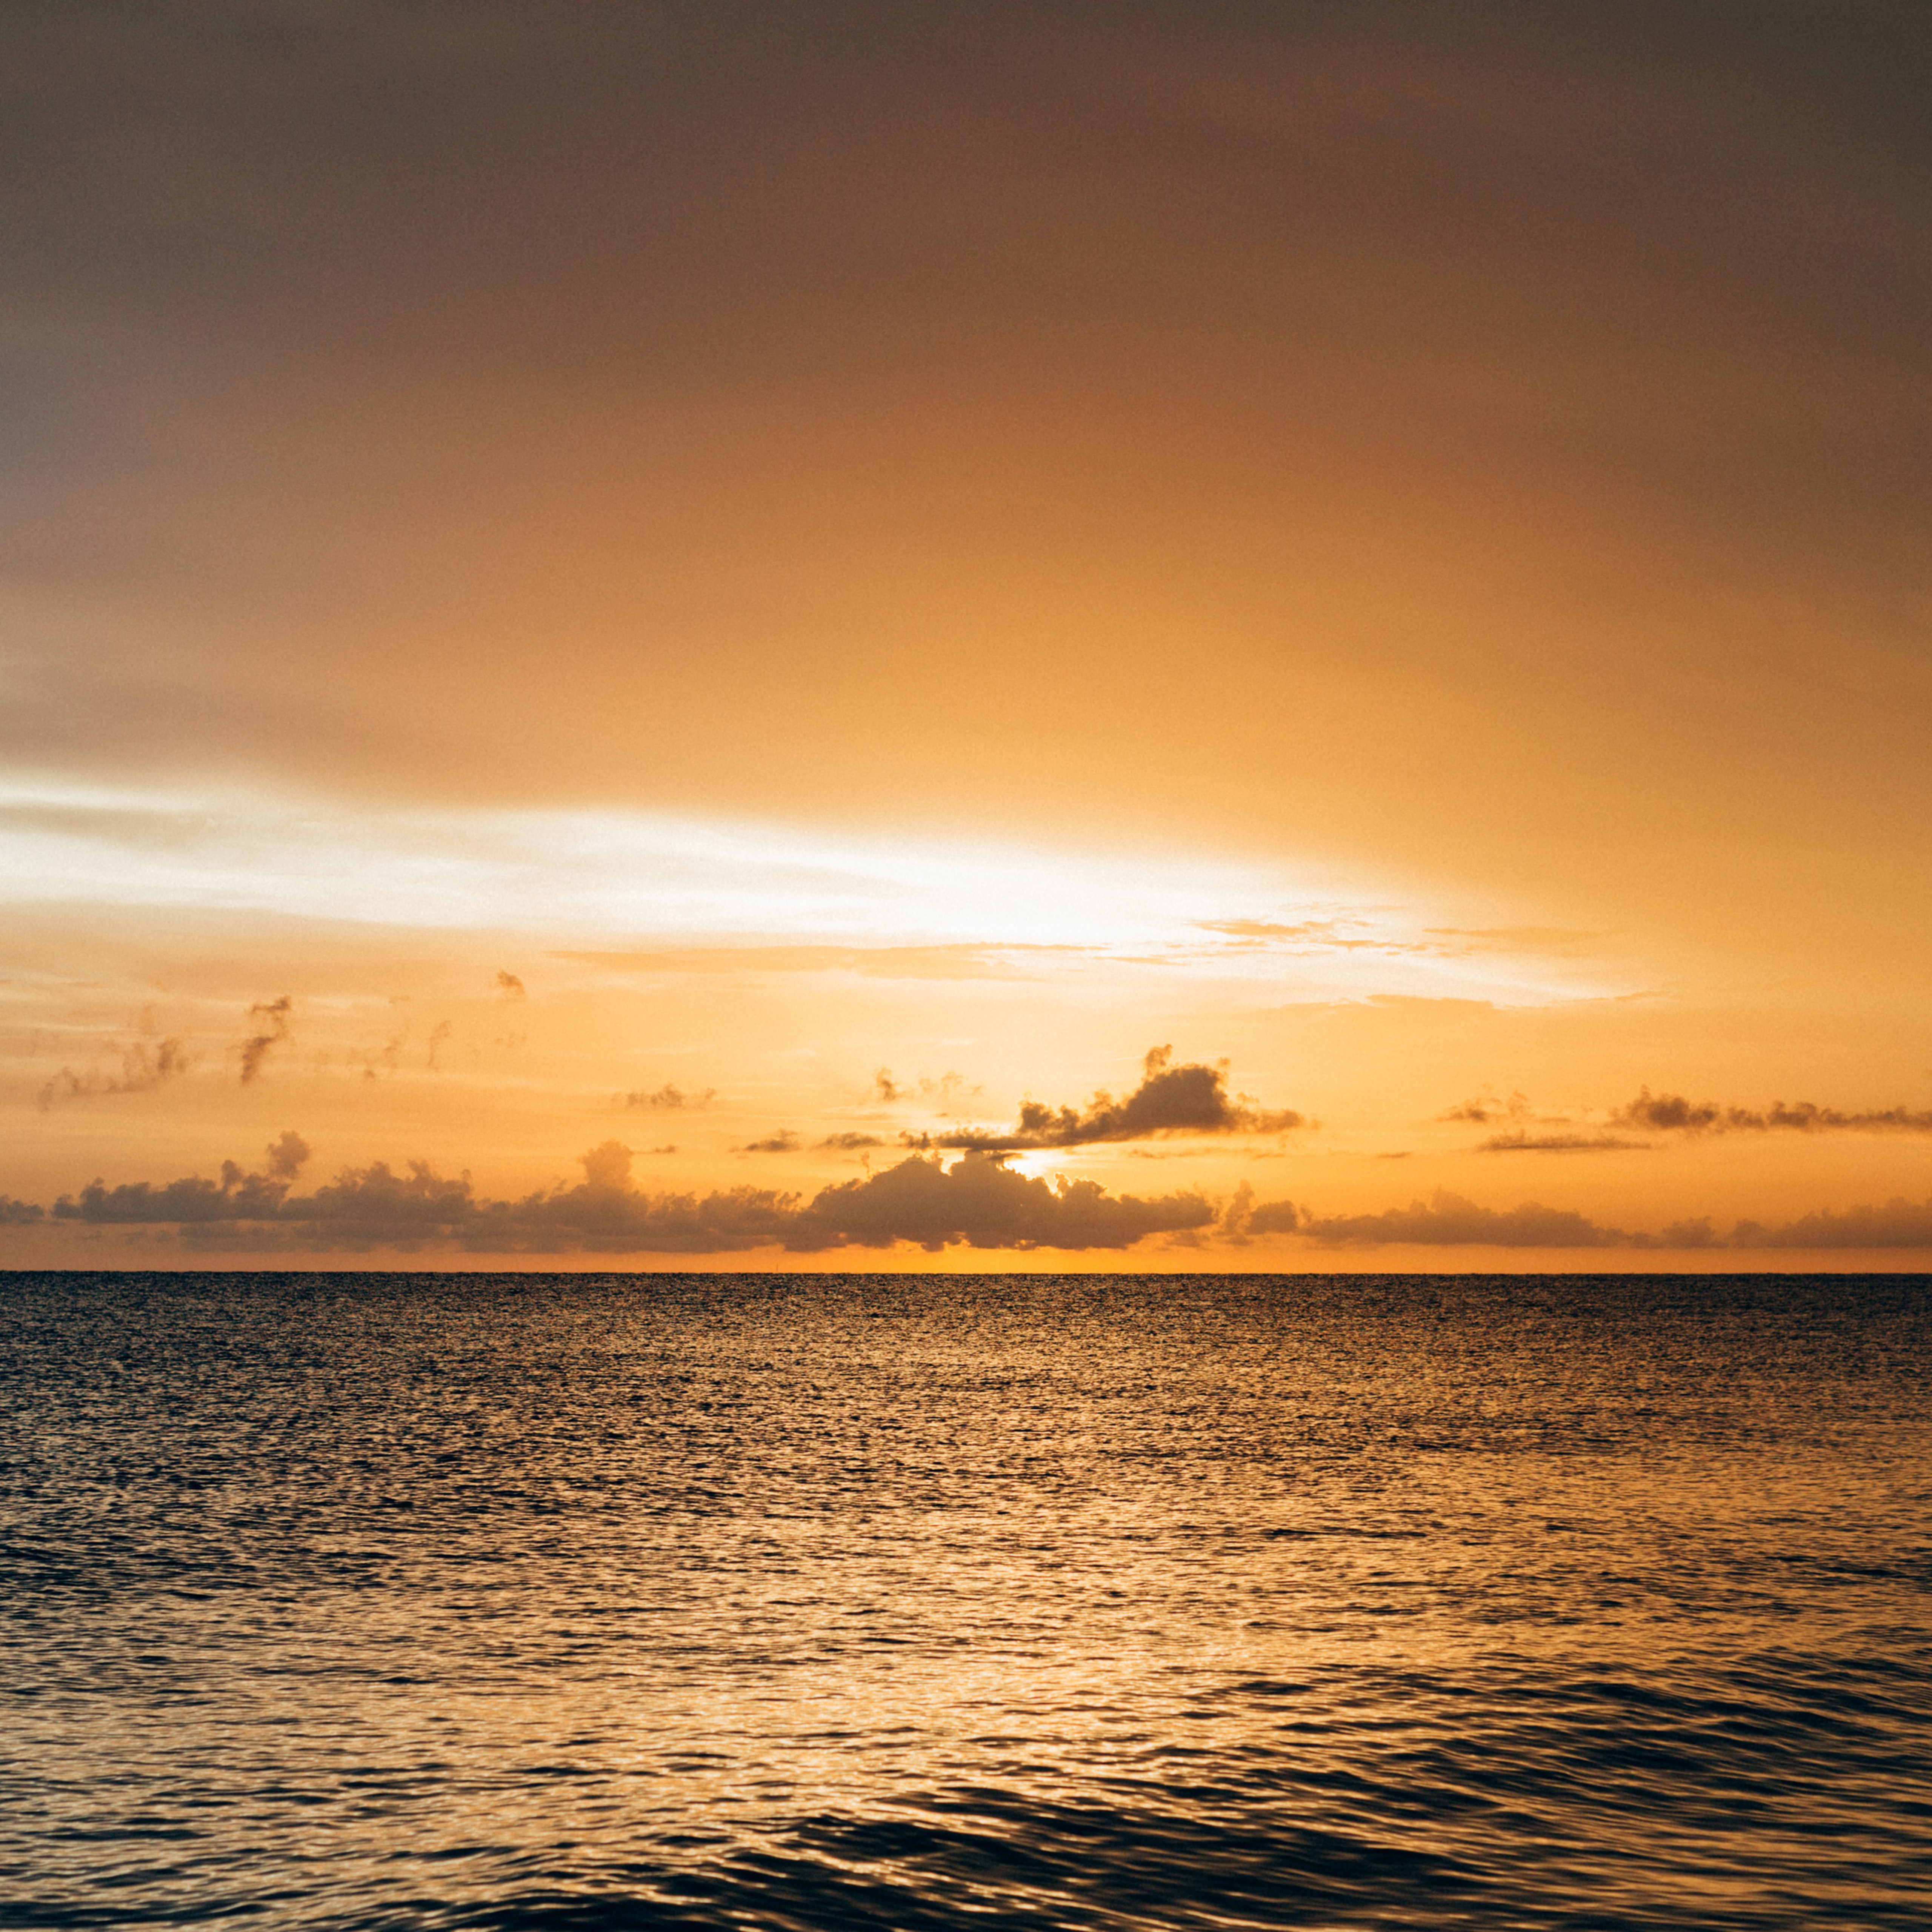 sunset wallpapers iphone ipad papers-co idownloadblog nature-sunset-sea-ocean-cloud-ipad-pro